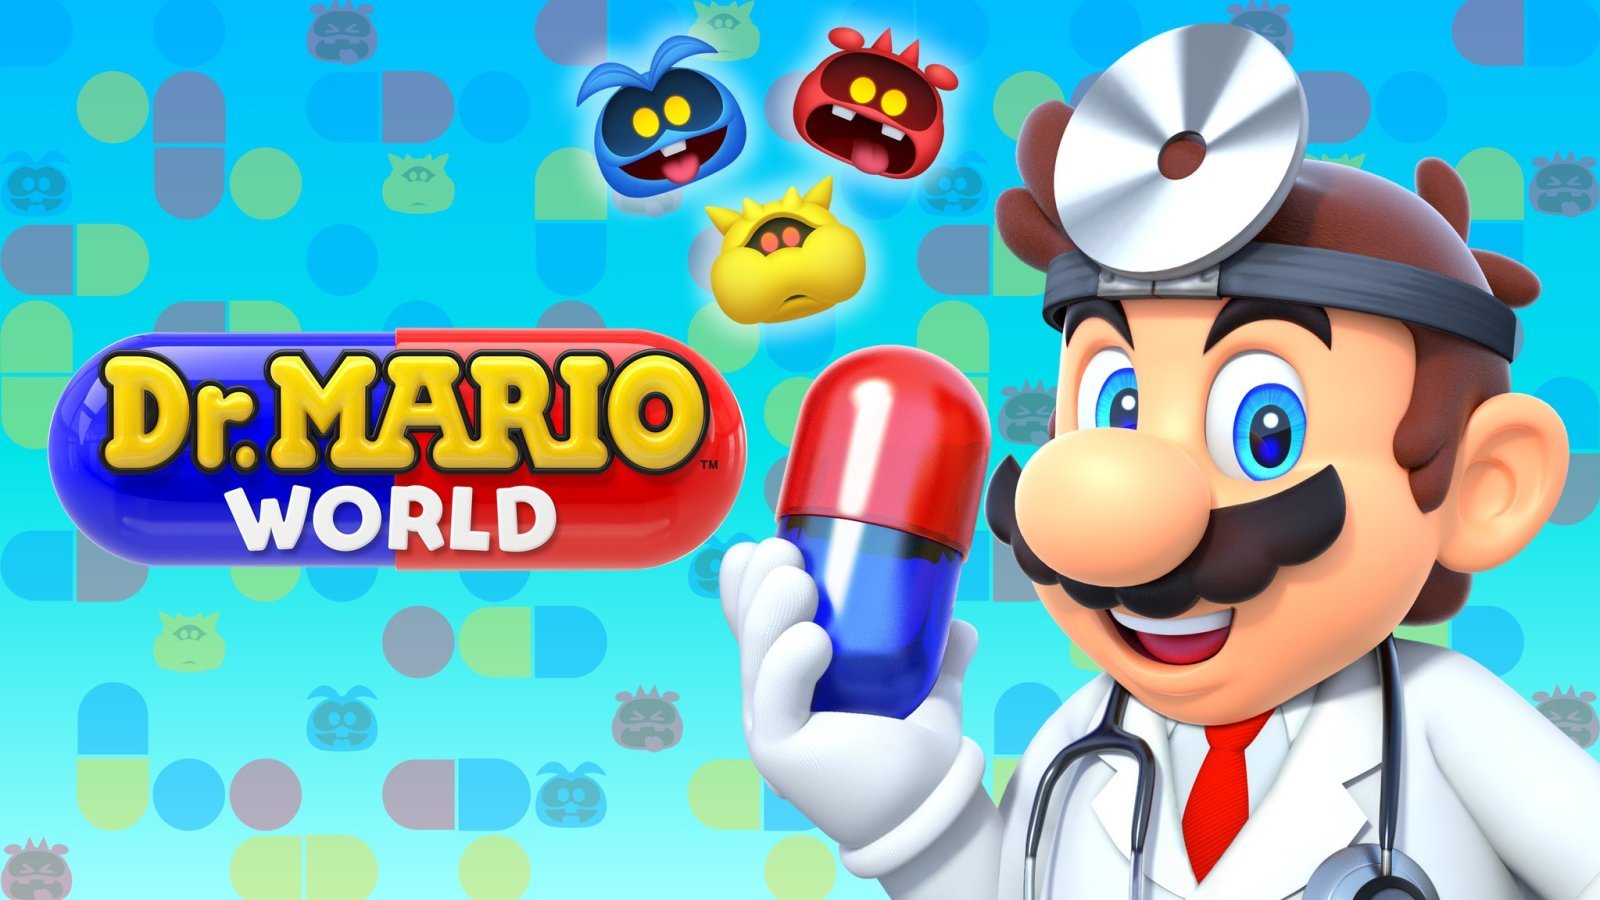 Dr. Mario World Akan Dimatikan pada 1 November